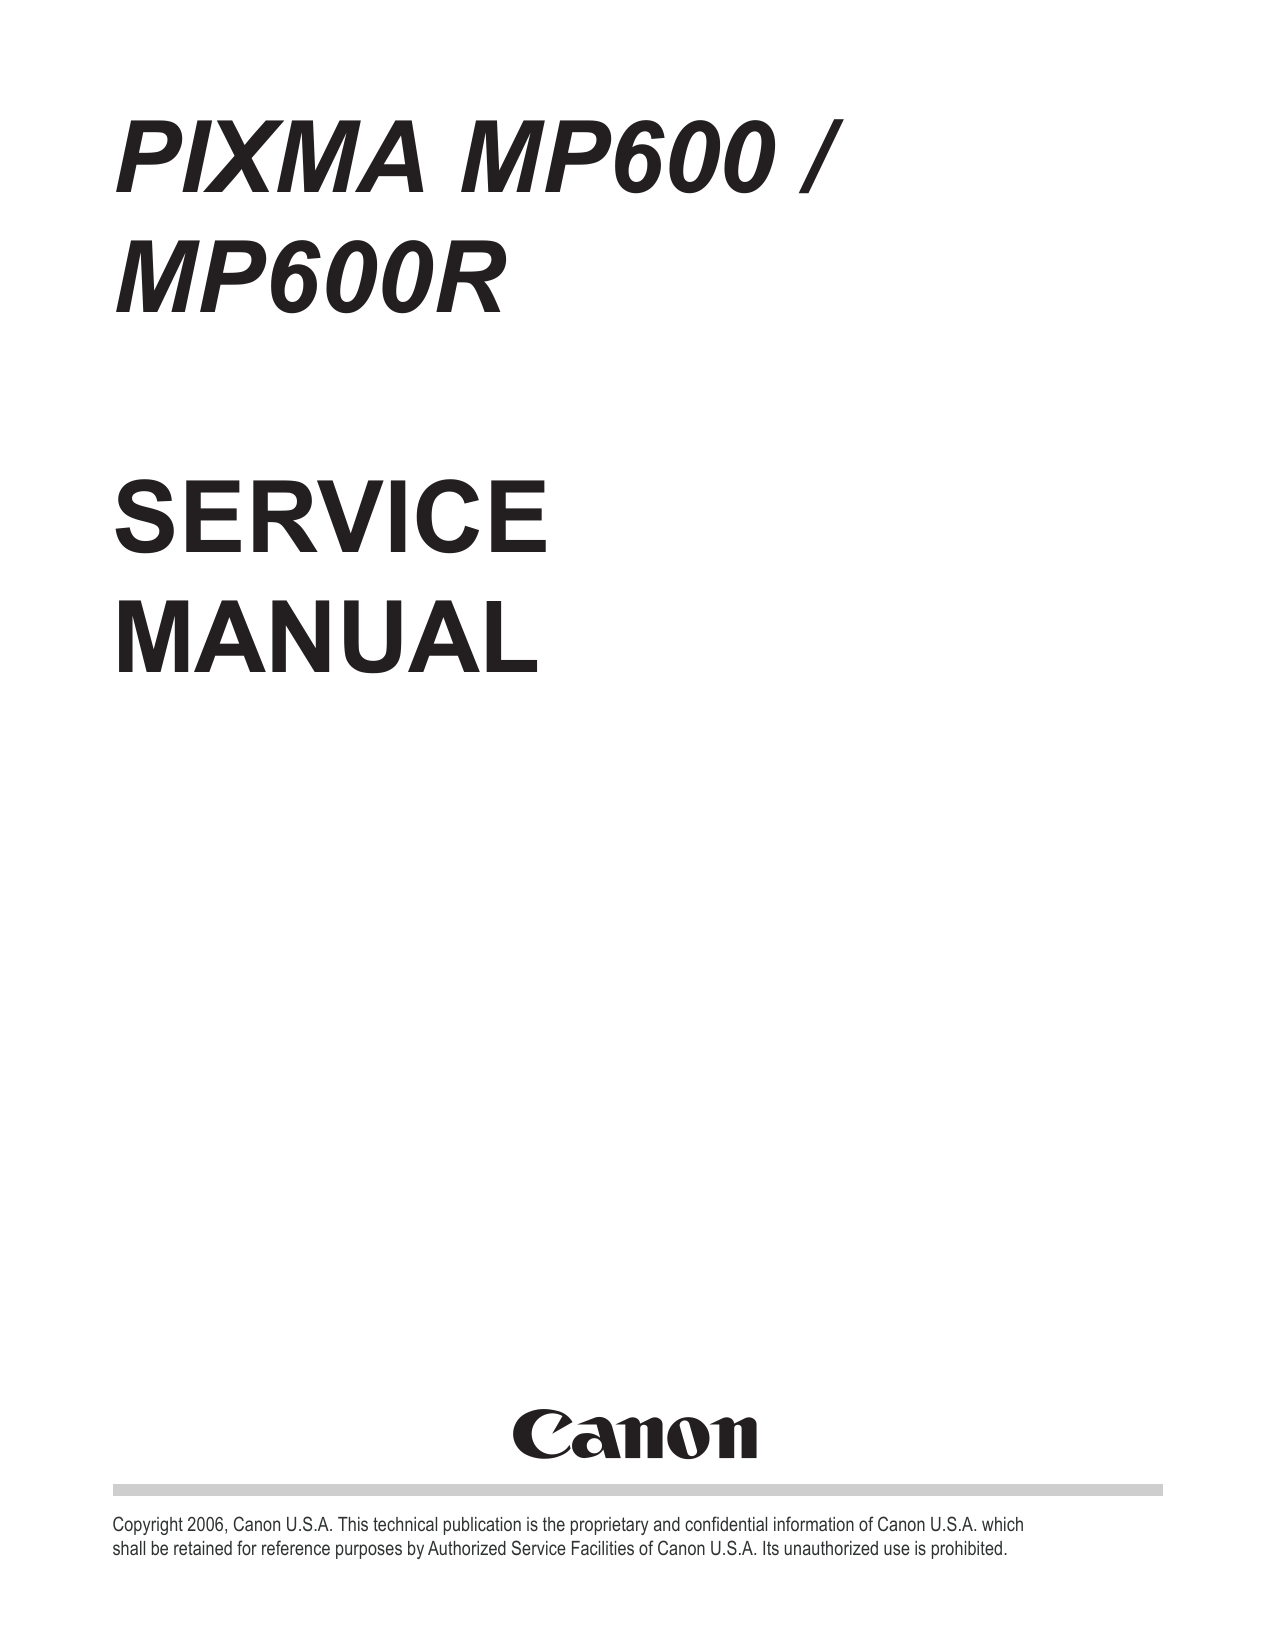 Canon Pixma MP600, MP600R multifunction inkjet printer service manual Preview image 6